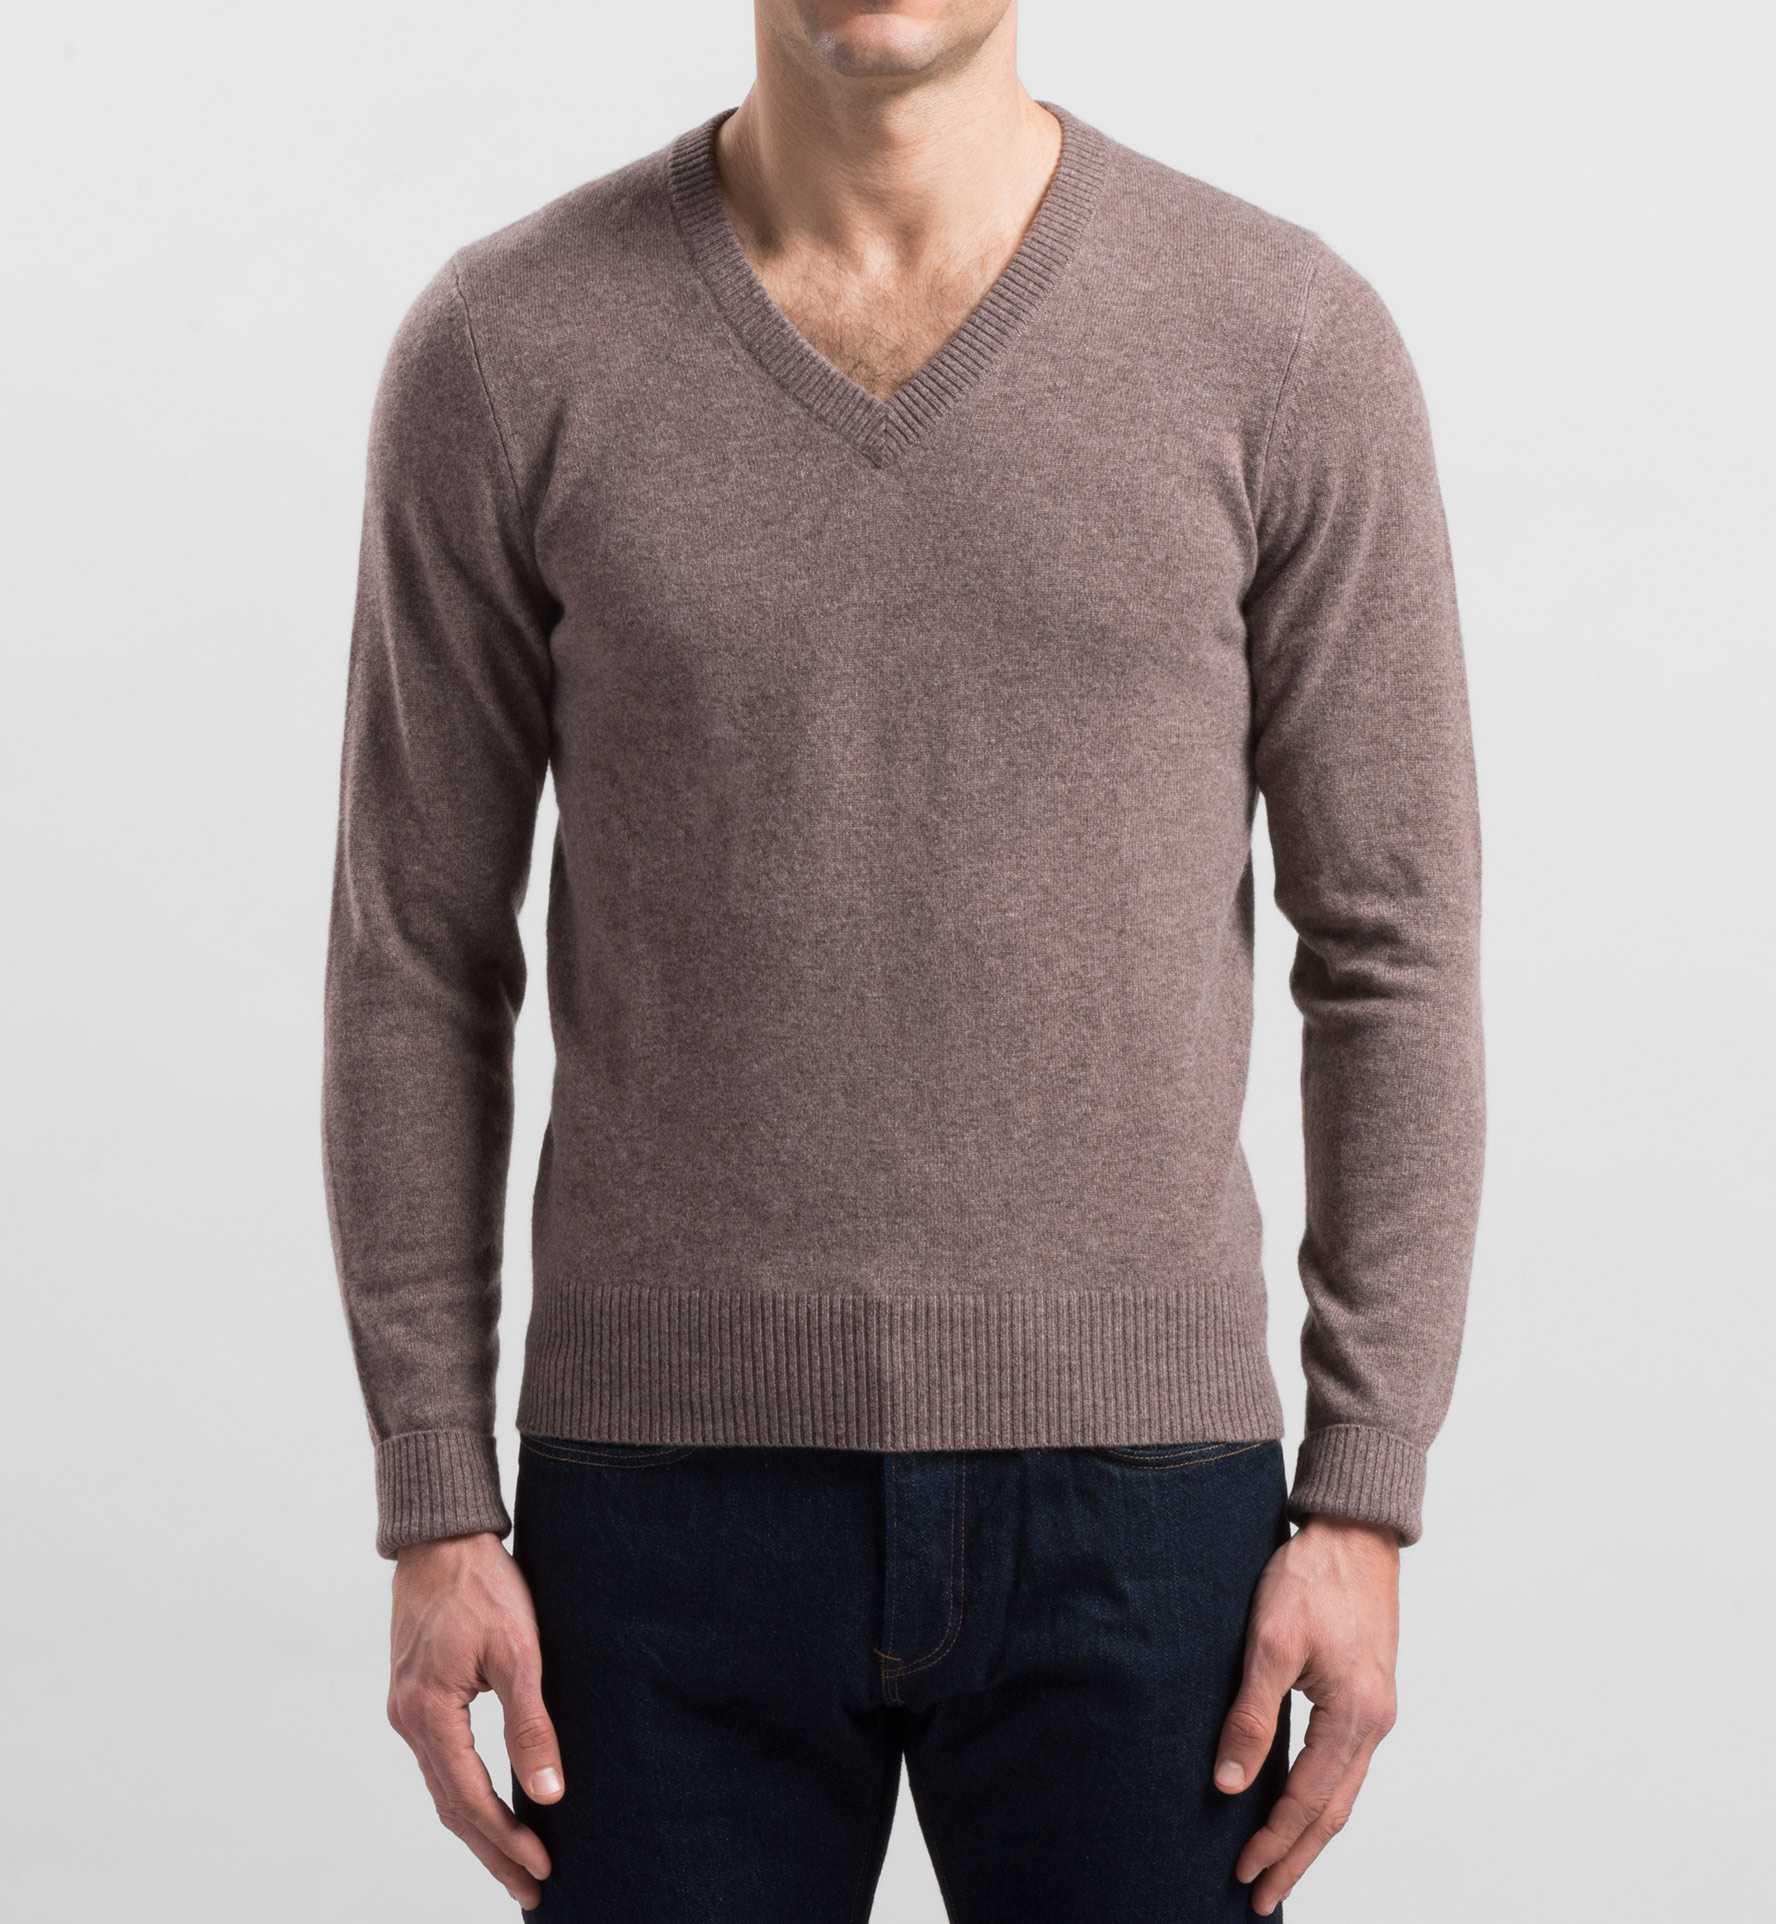 Beige Cashmere V-Neck Sweater by Proper Cloth